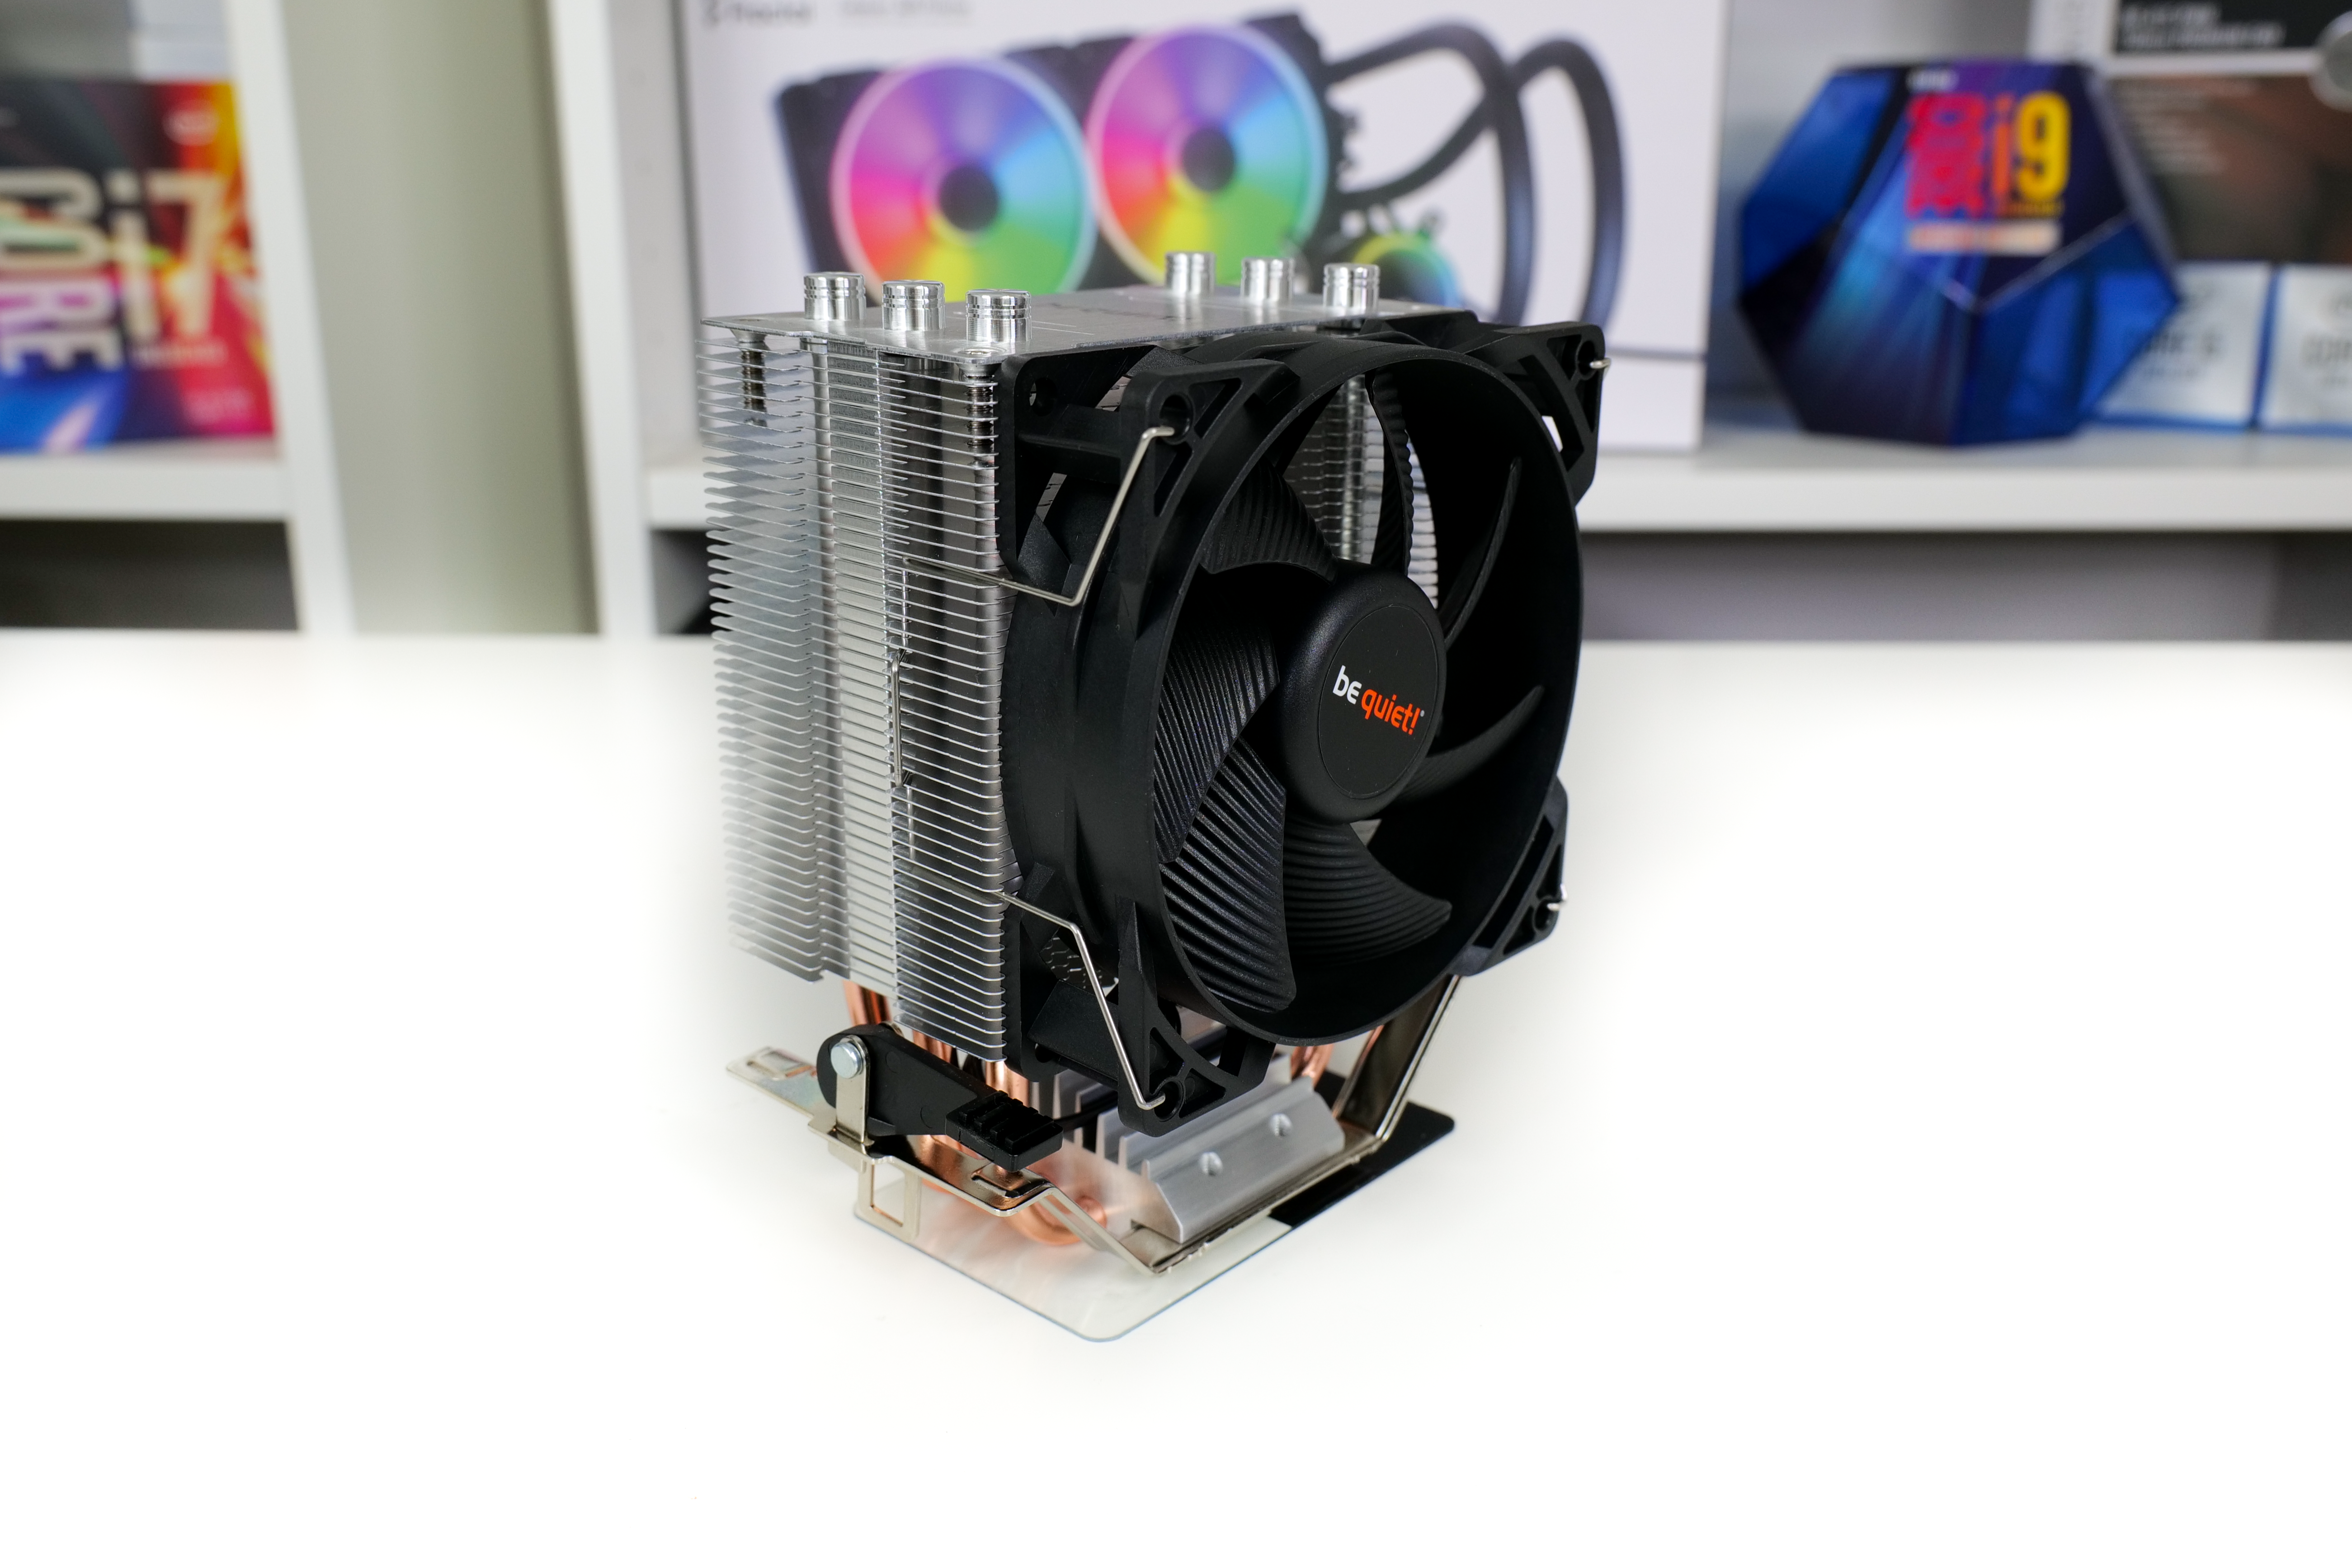 Specialize Maxim Inhale be quiet! Pure Rock Slim 2 CPU Cooler Review | KitGuru